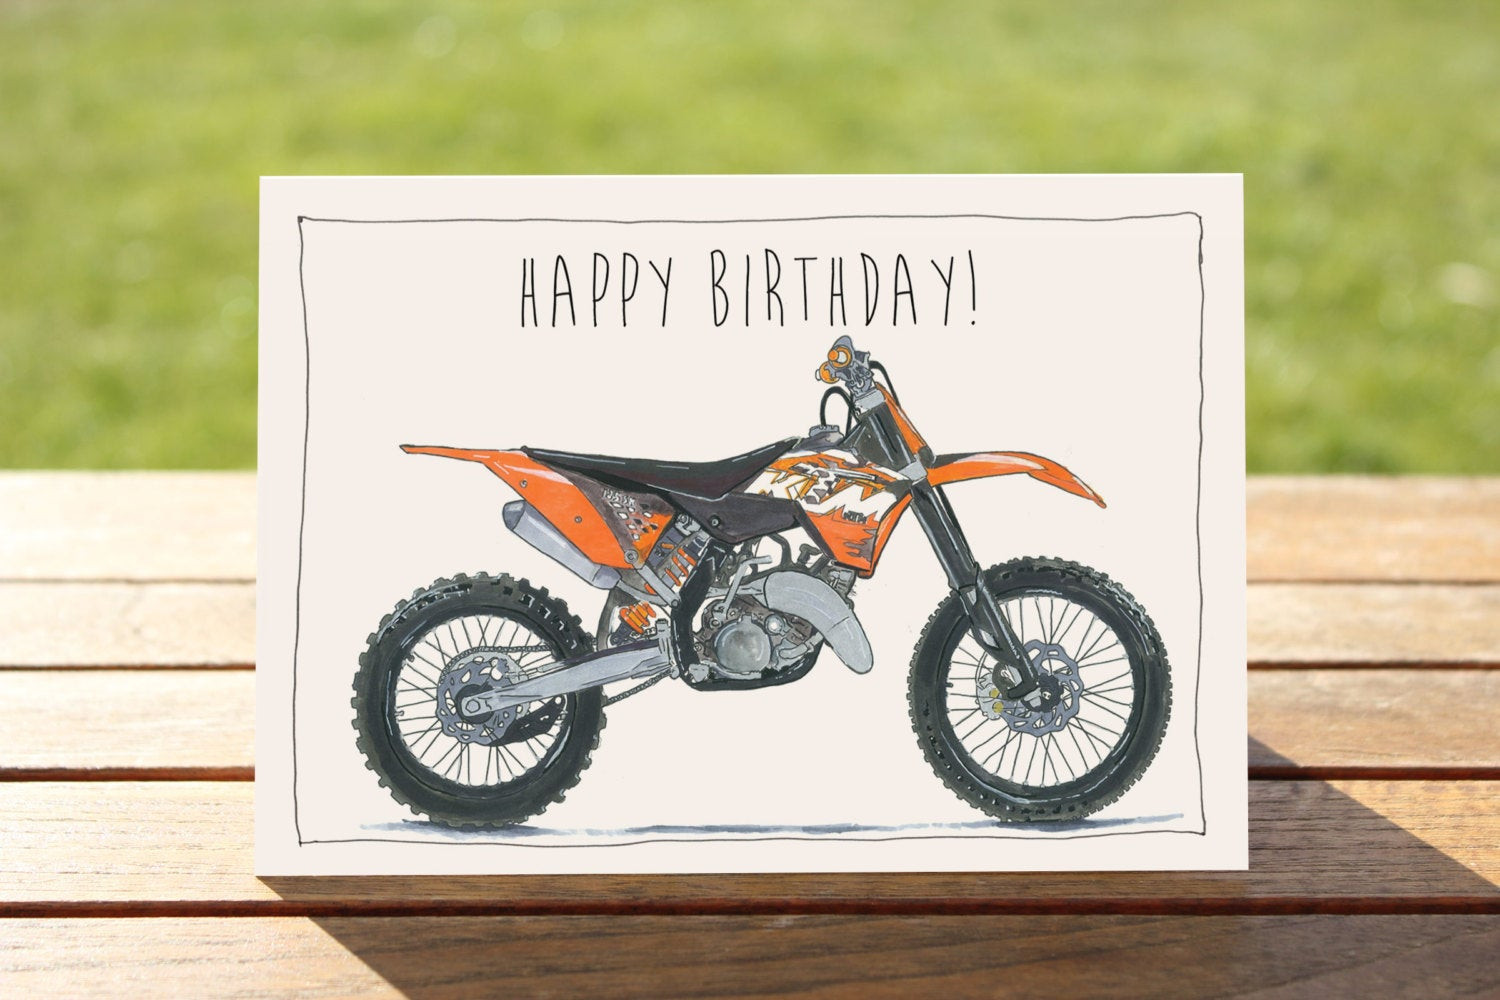 Motorcycle Birthday Cards
 Motorcycle Birthday Card KTM 125SX Dirt Bike A6 6